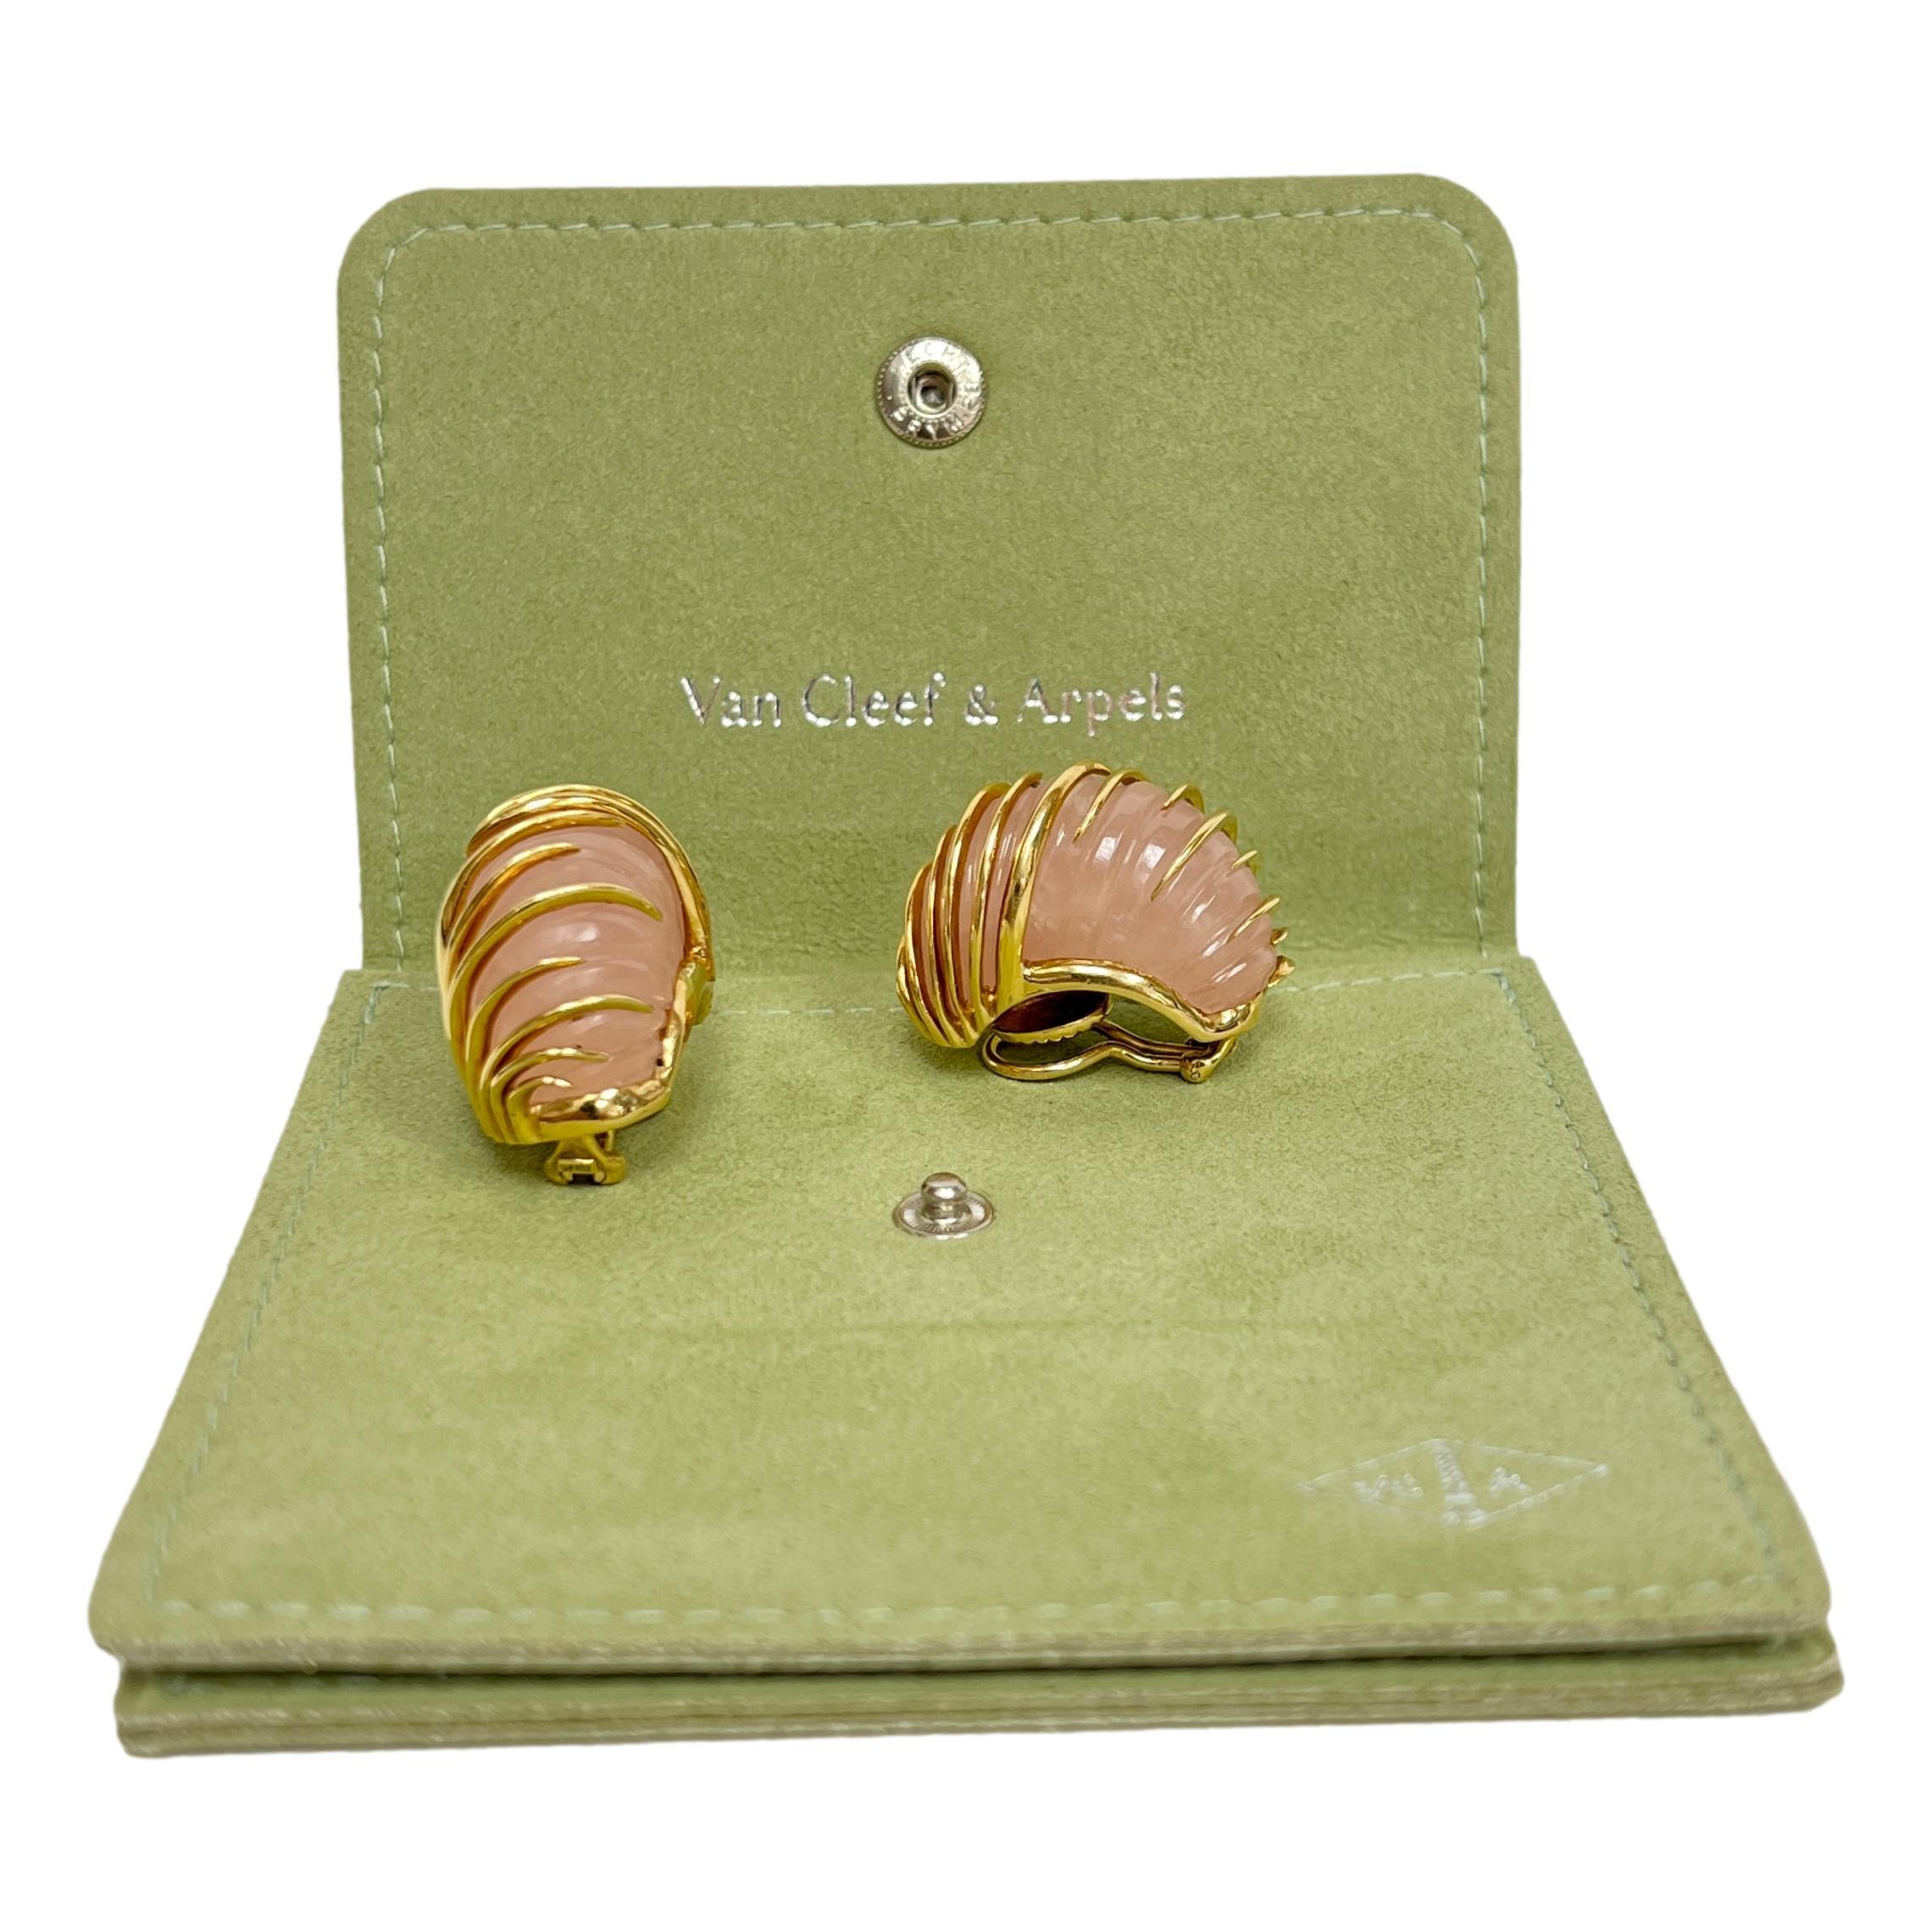 Van Cleef & Arpels Carved Rose Quartz Earrings in 18 Karat Yellow Gold For Sale 4